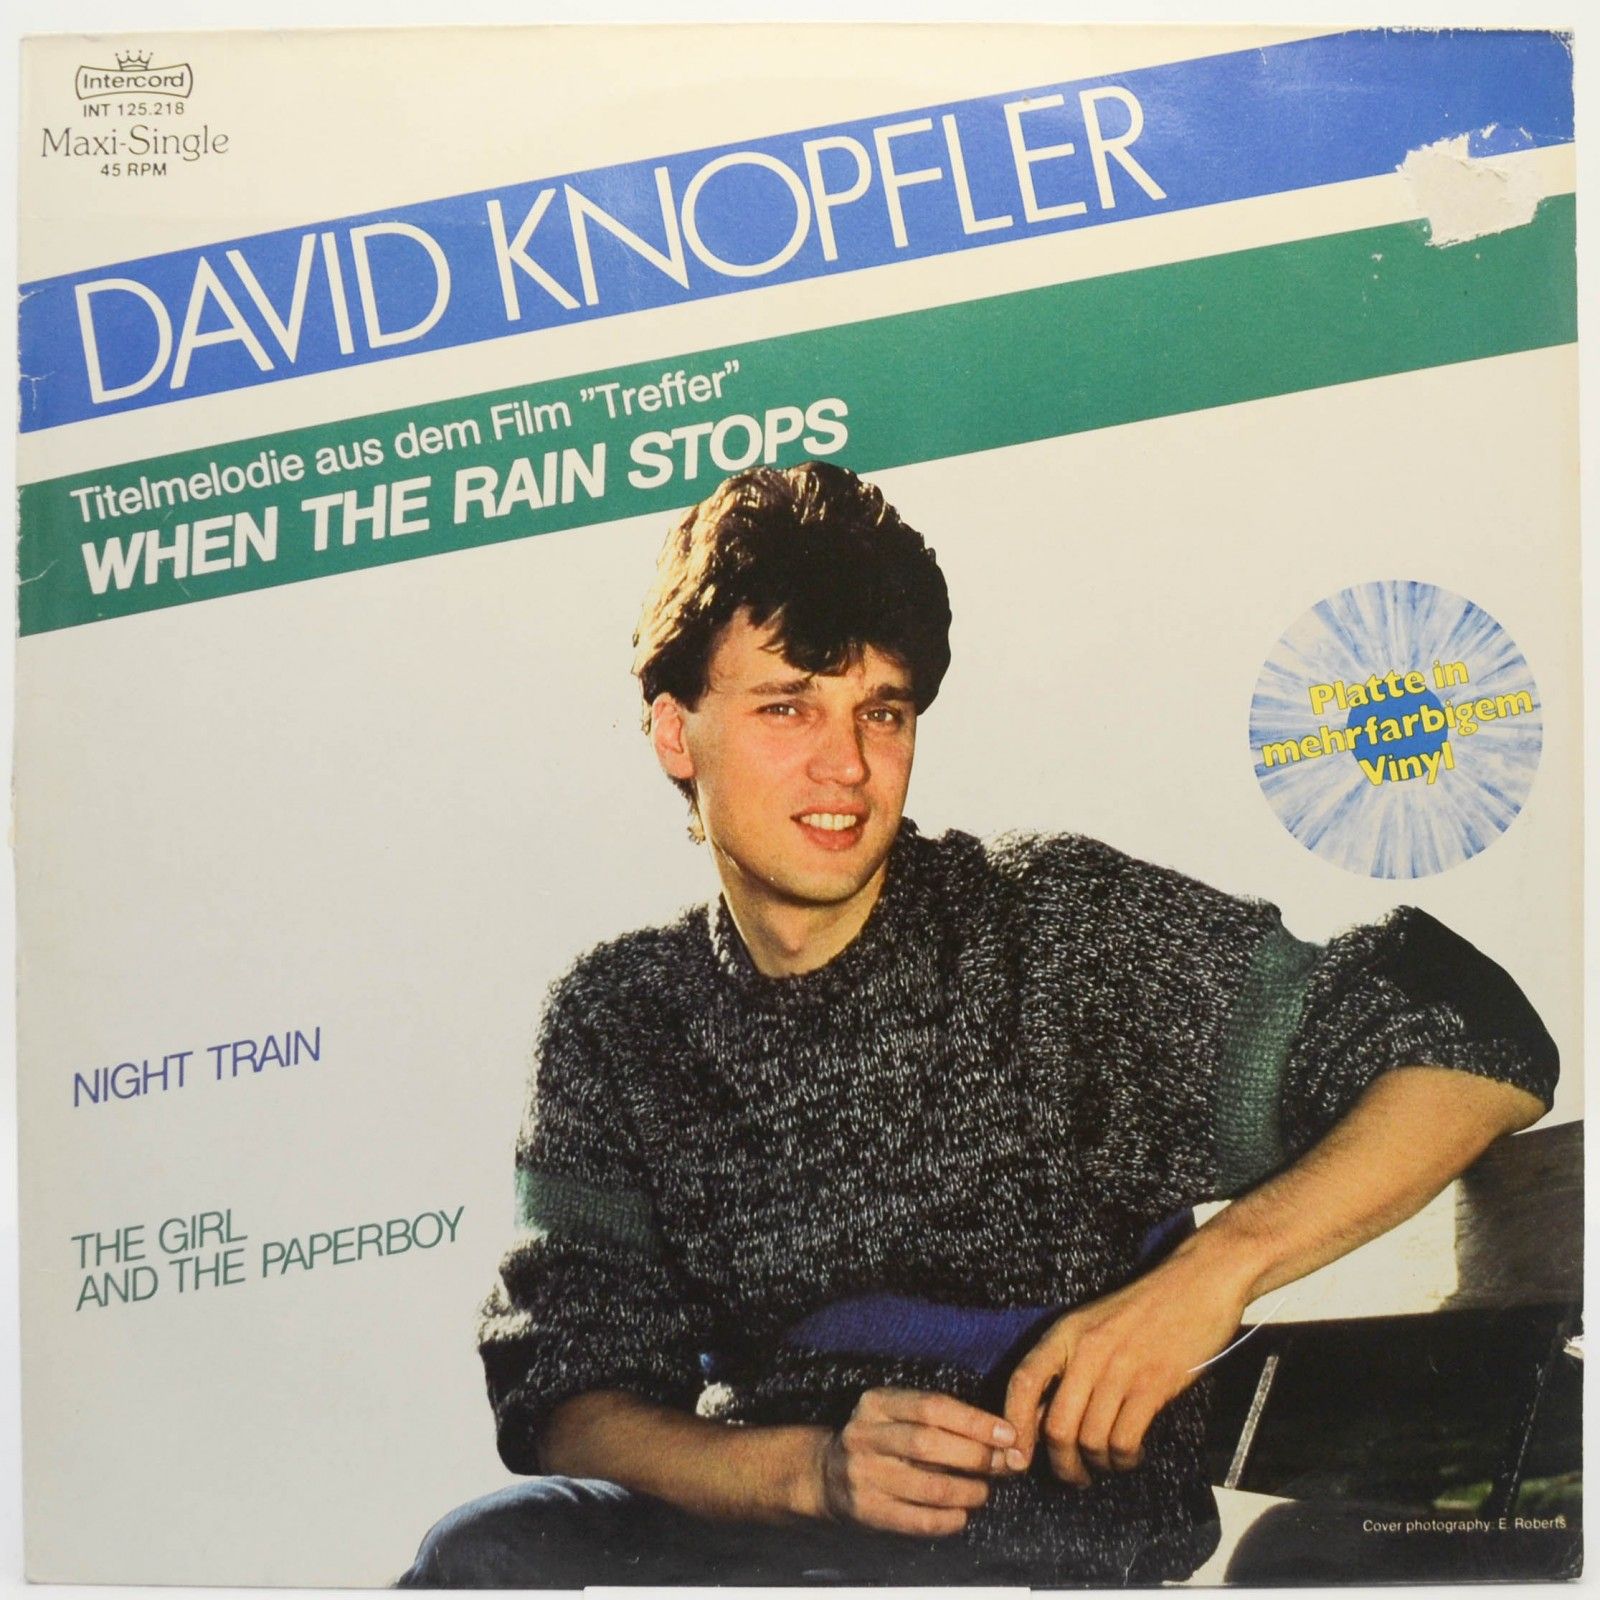 David Knopfler — When The Rain Stops, 1984